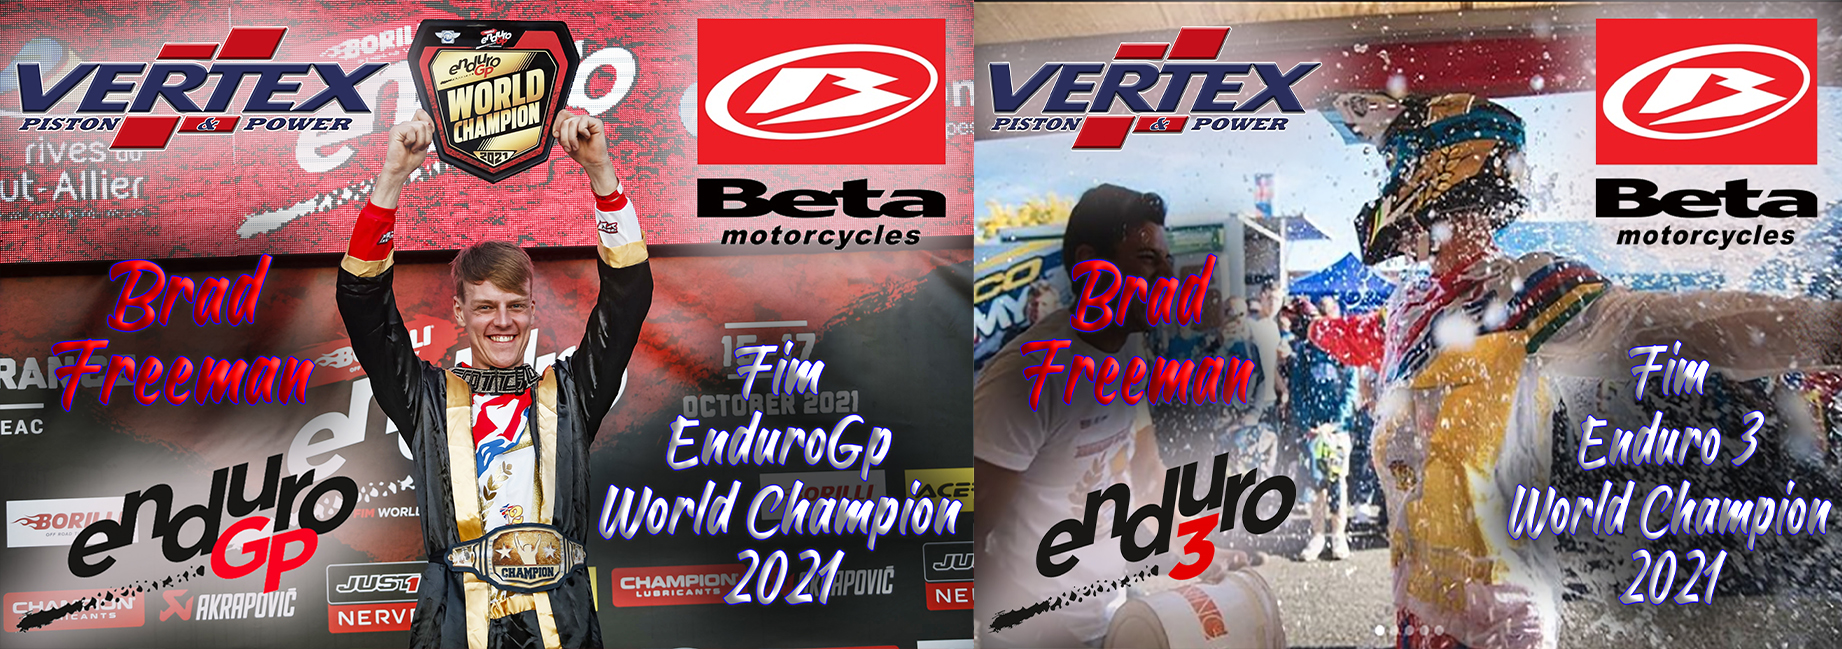 2021 Freeman Enduro Gp & E3 World Champion